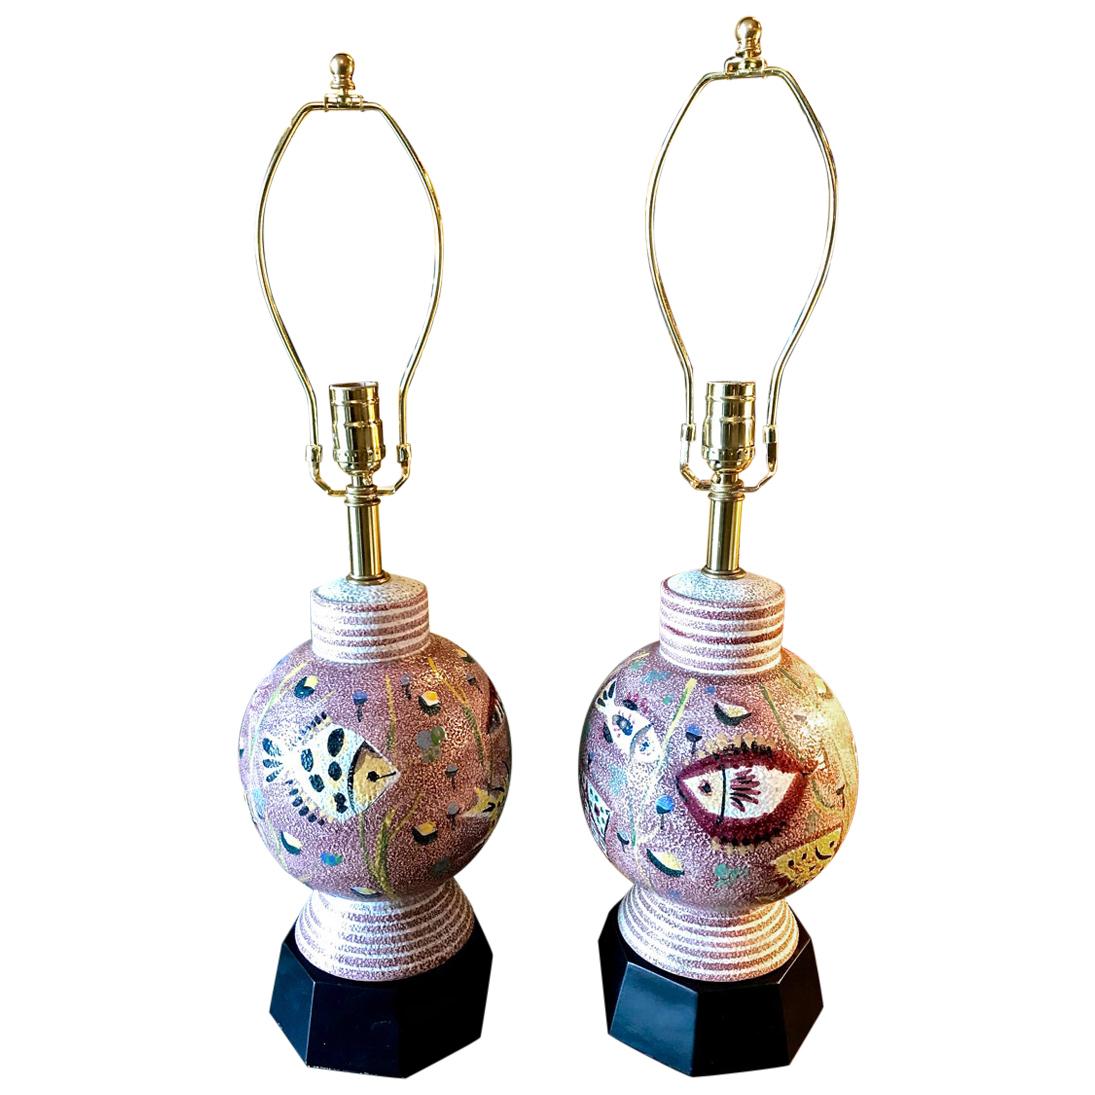 Pair of Italian Midcentury "Fish" Lamps, Attributed to Fantoni